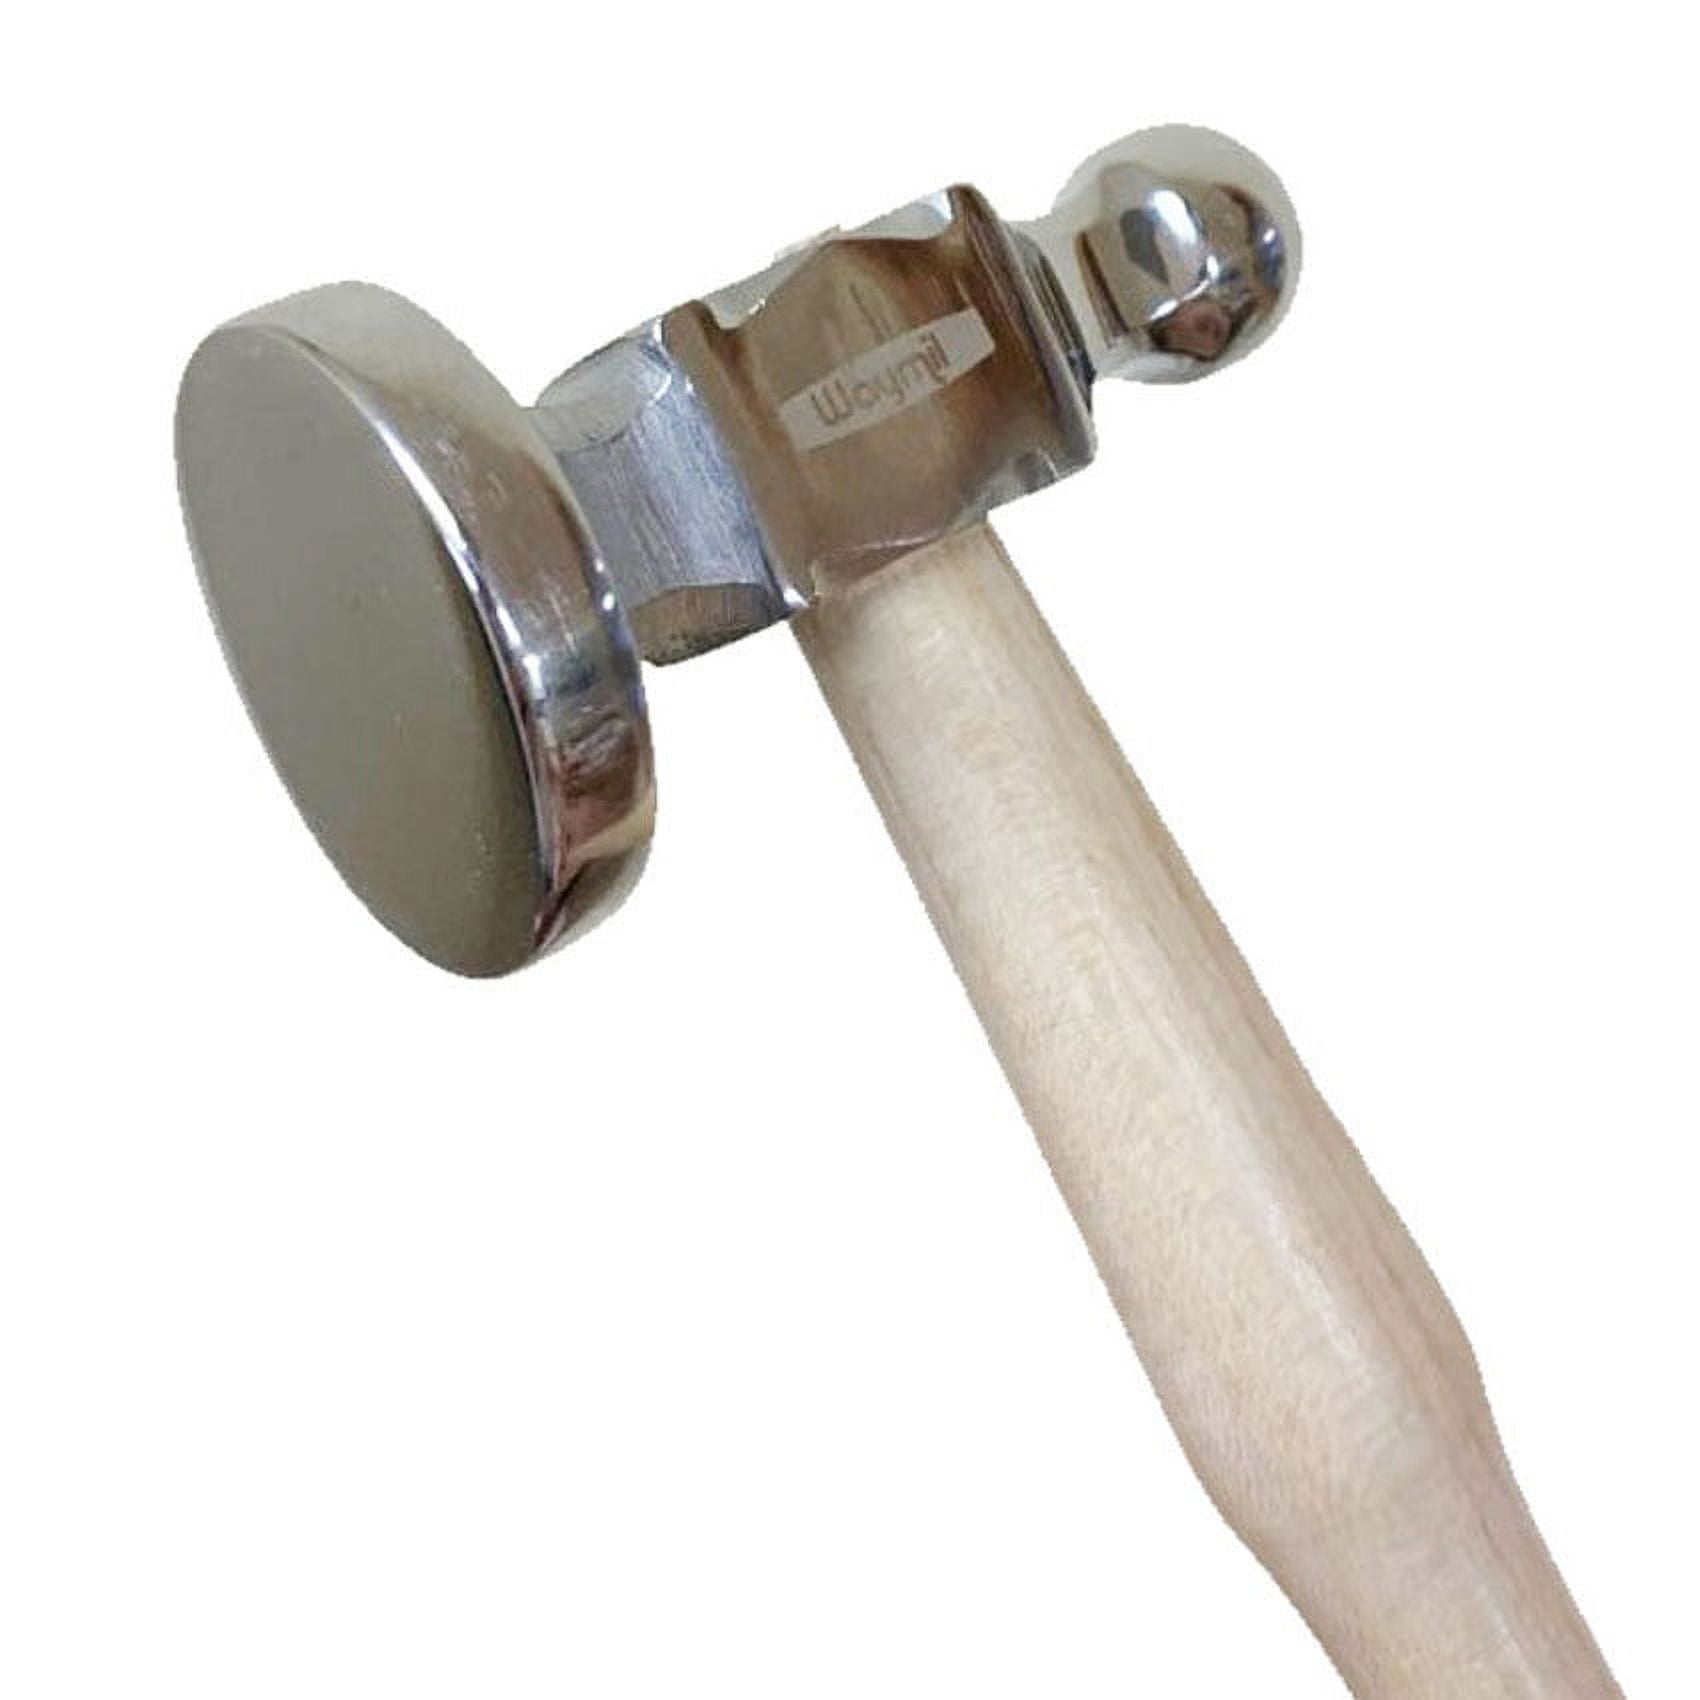 Jeweler's Hammer, flat round